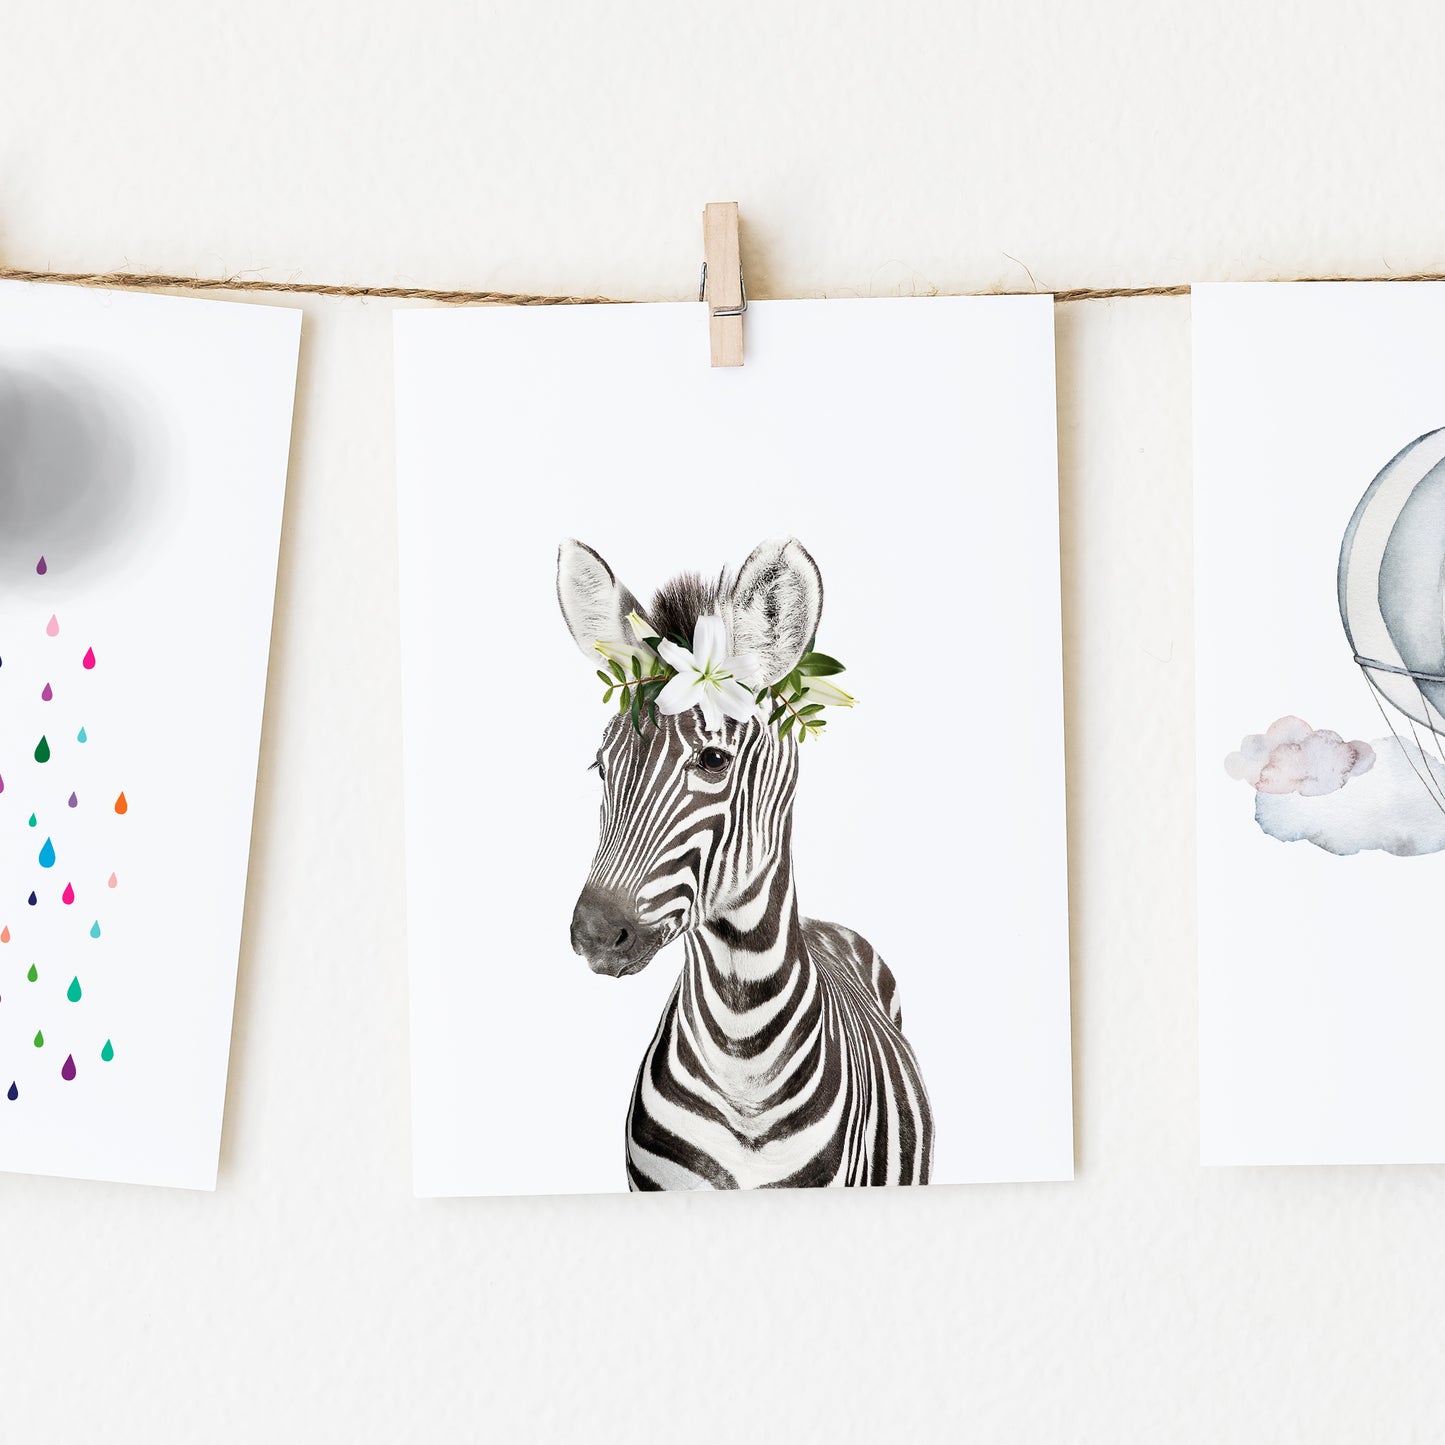 Baby Zebra with Flower Crown  nursery wall art for girls room